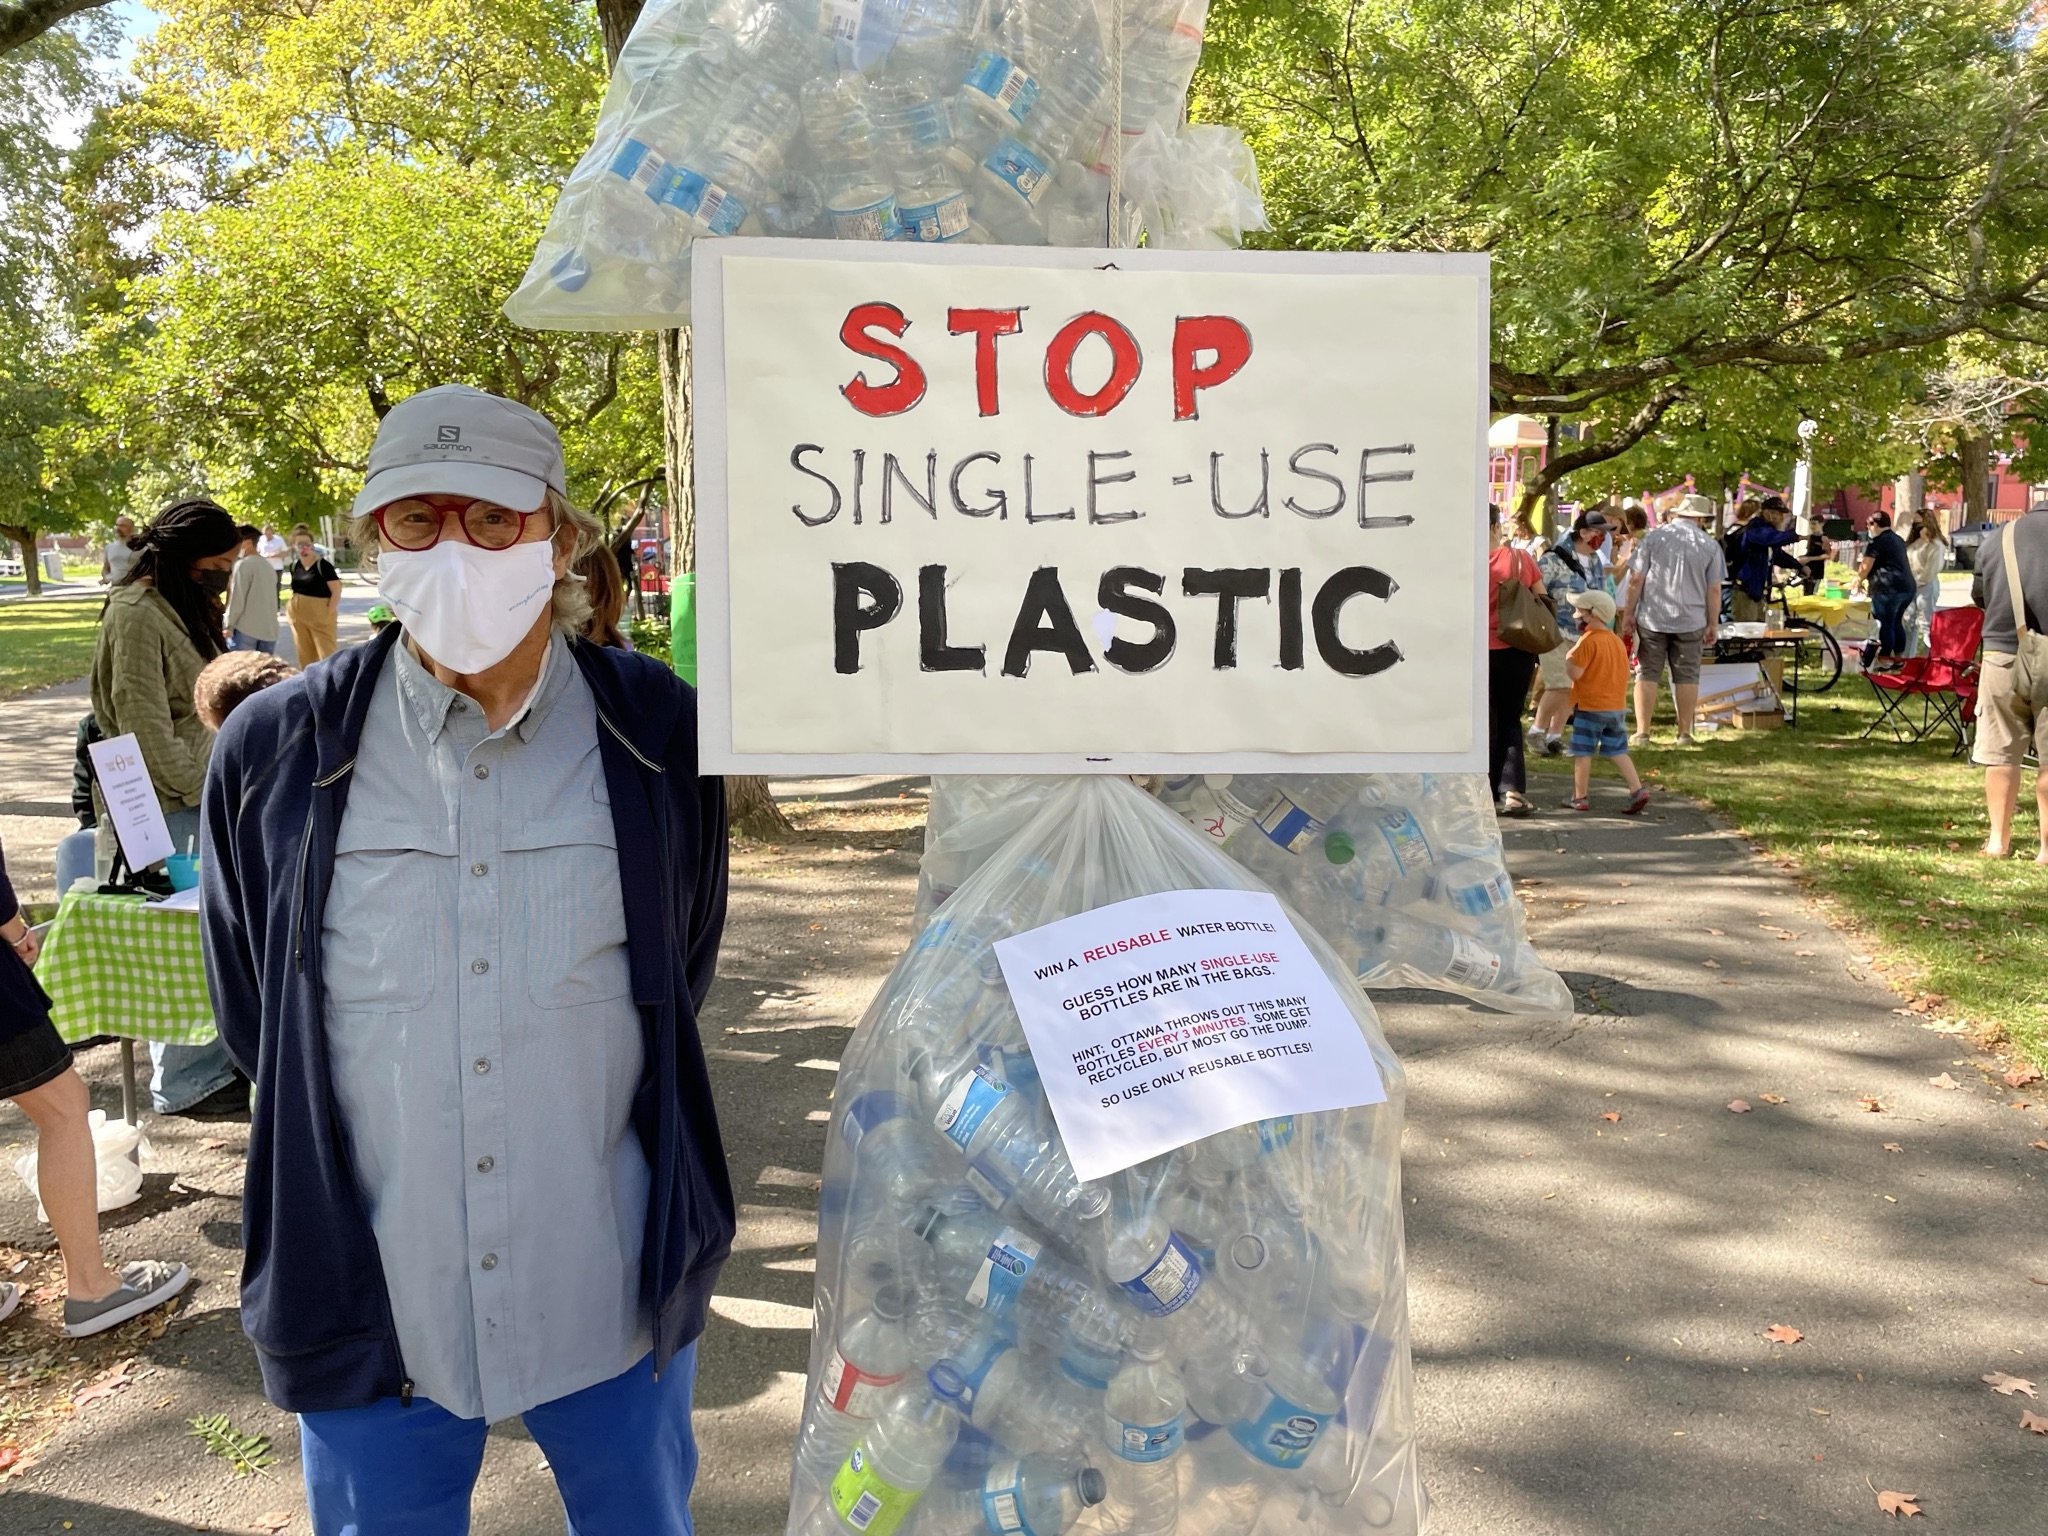 A striking display about single-use plastics